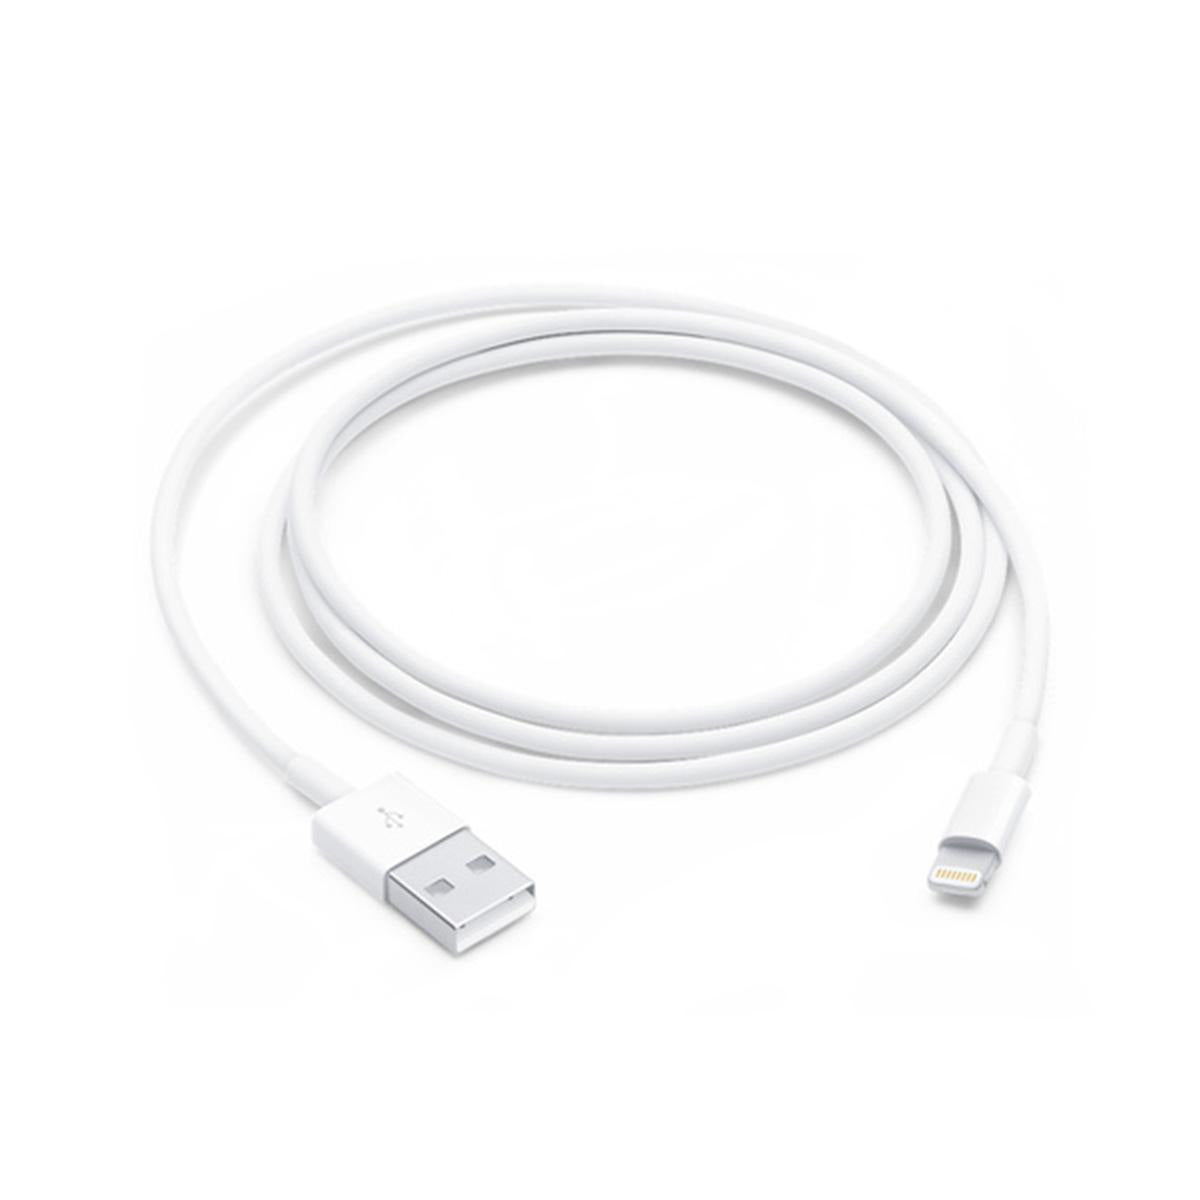 Apple Original Lightning to USB Cable (1M)